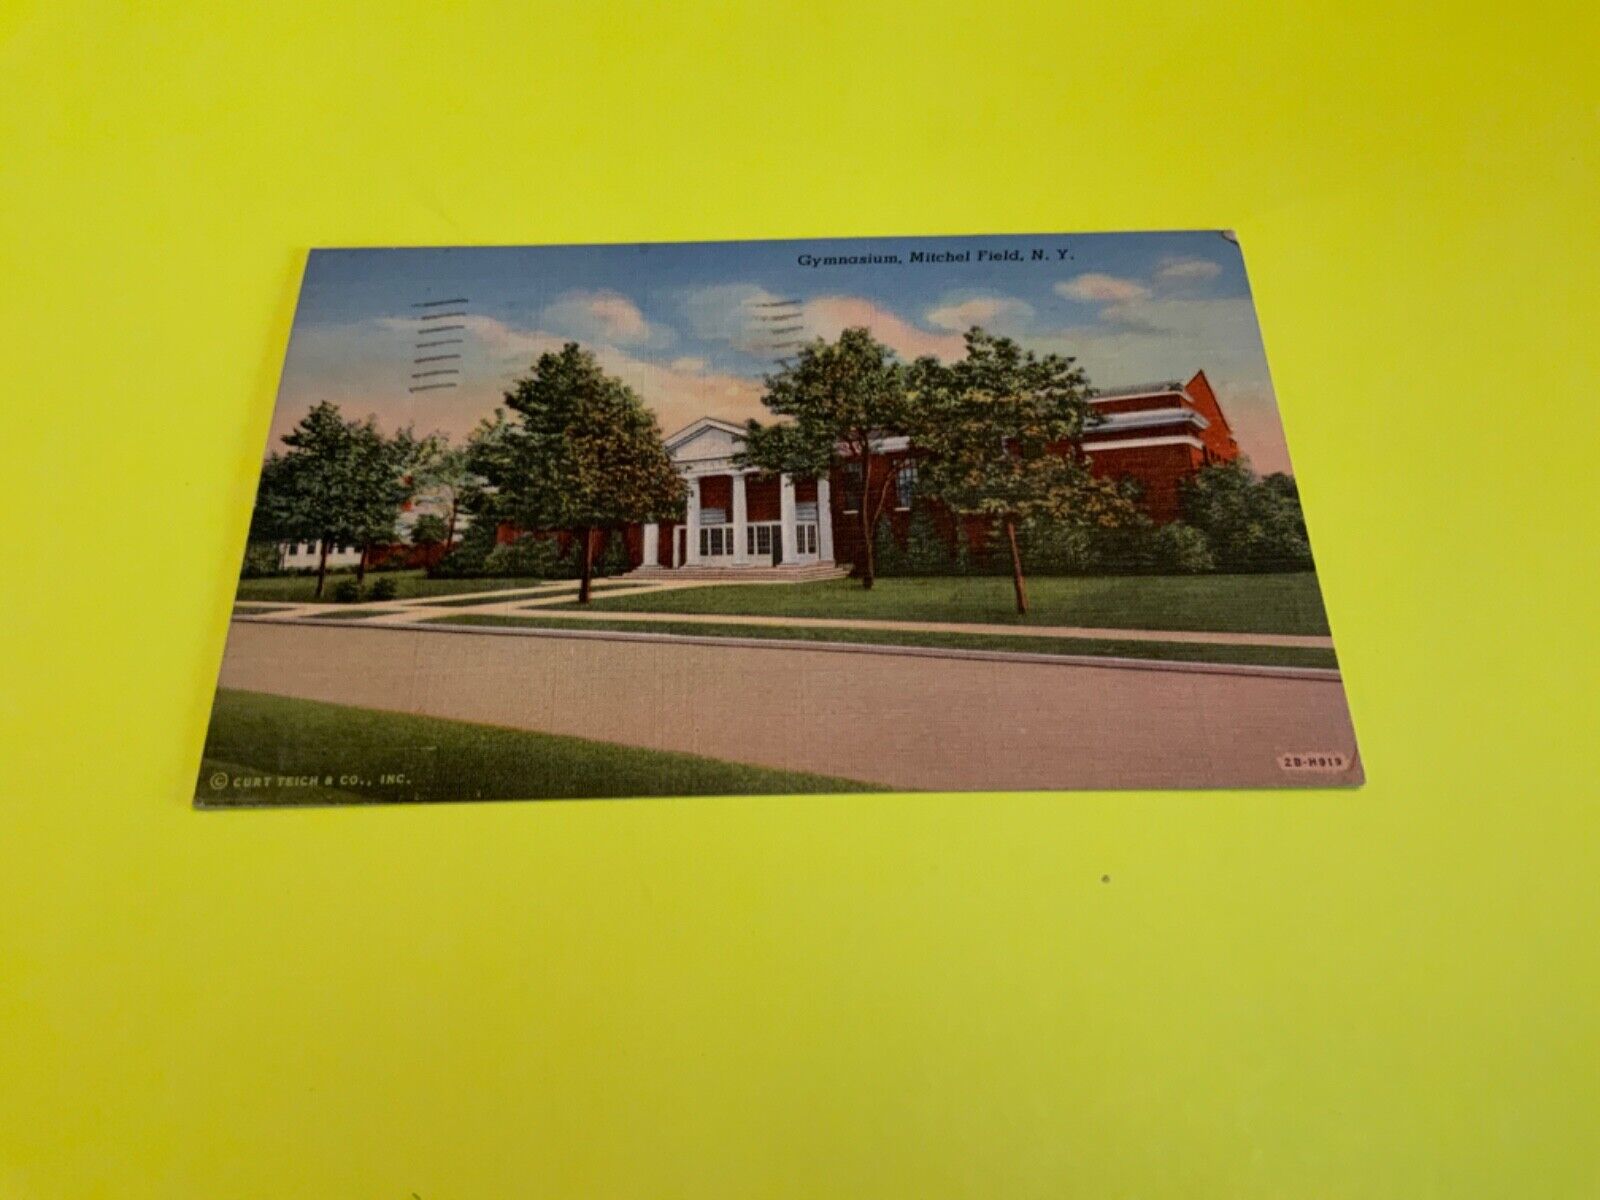 Mitchel Field, N.Y. ~ Gymnasium - 1943 Vintage Postcard